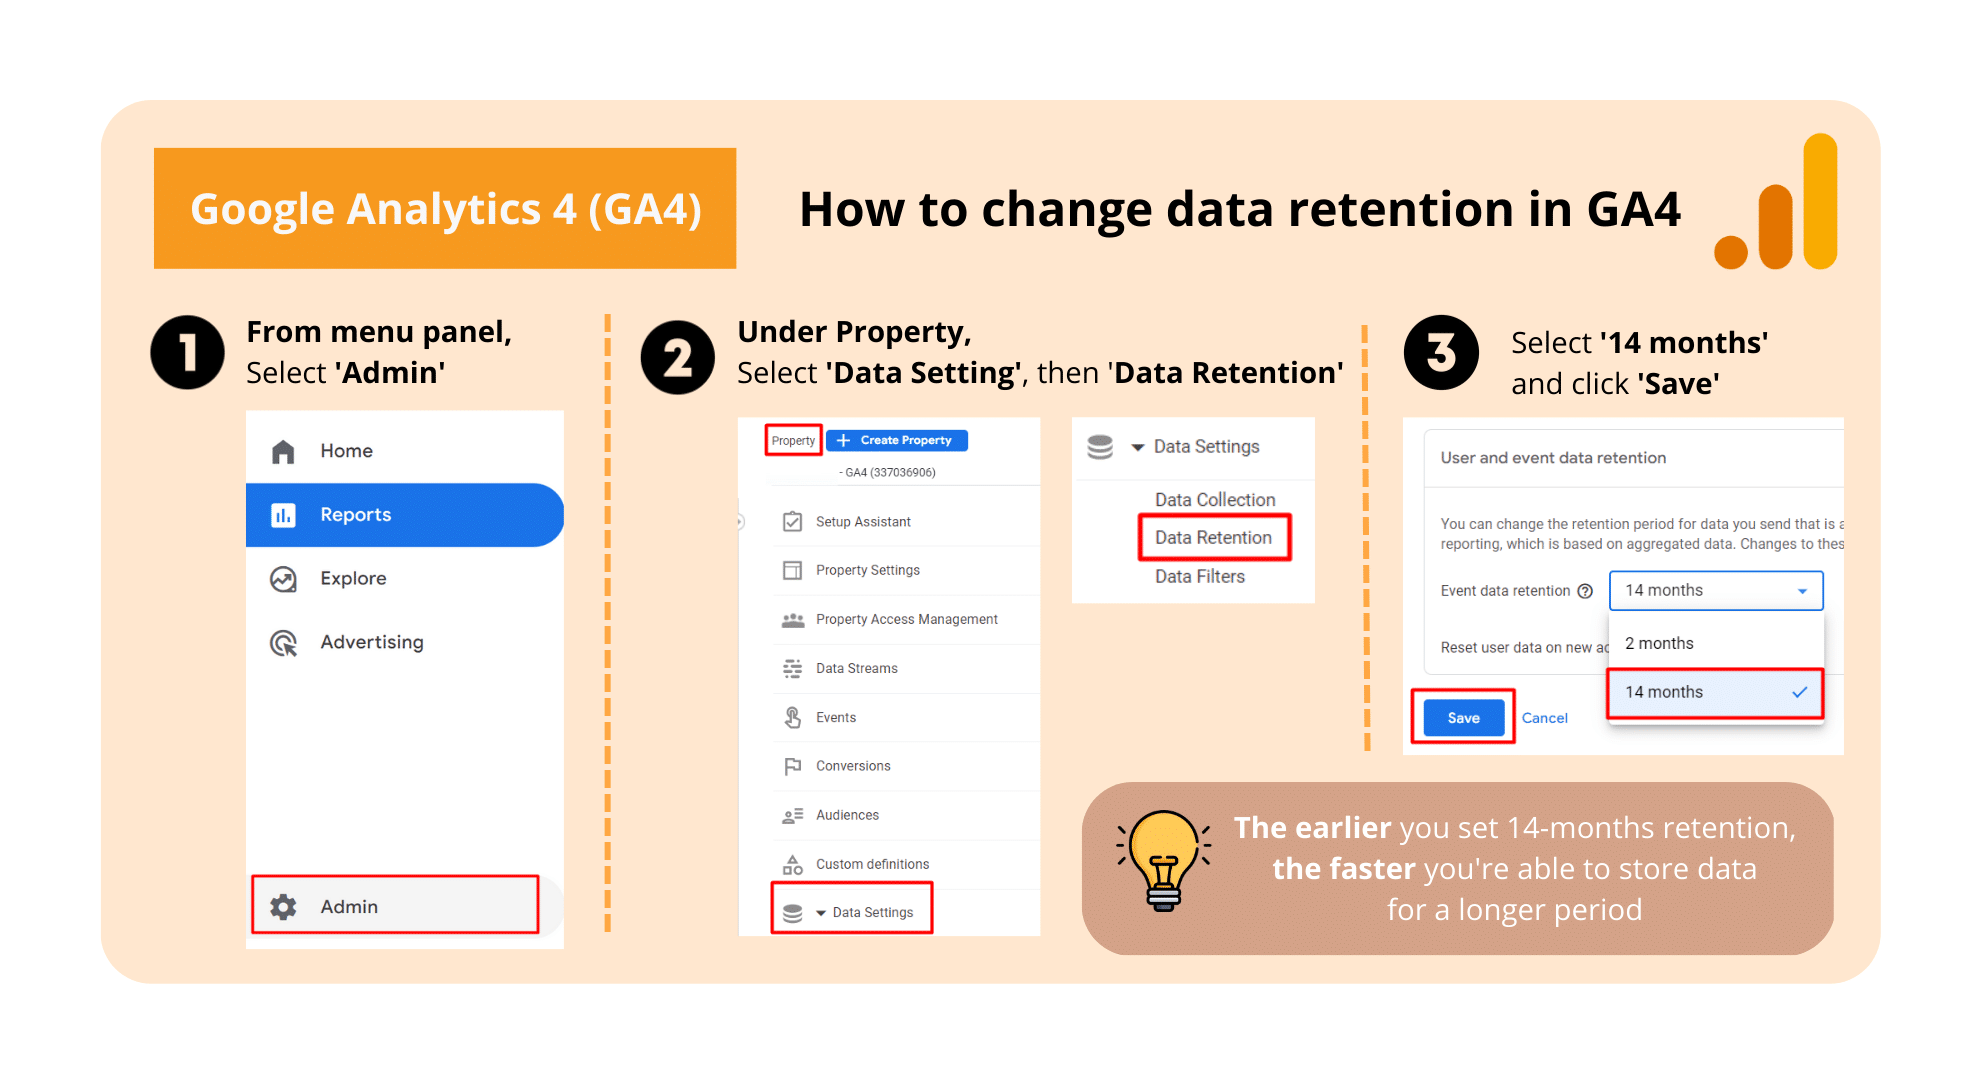 Steps to change data retention in GA4.